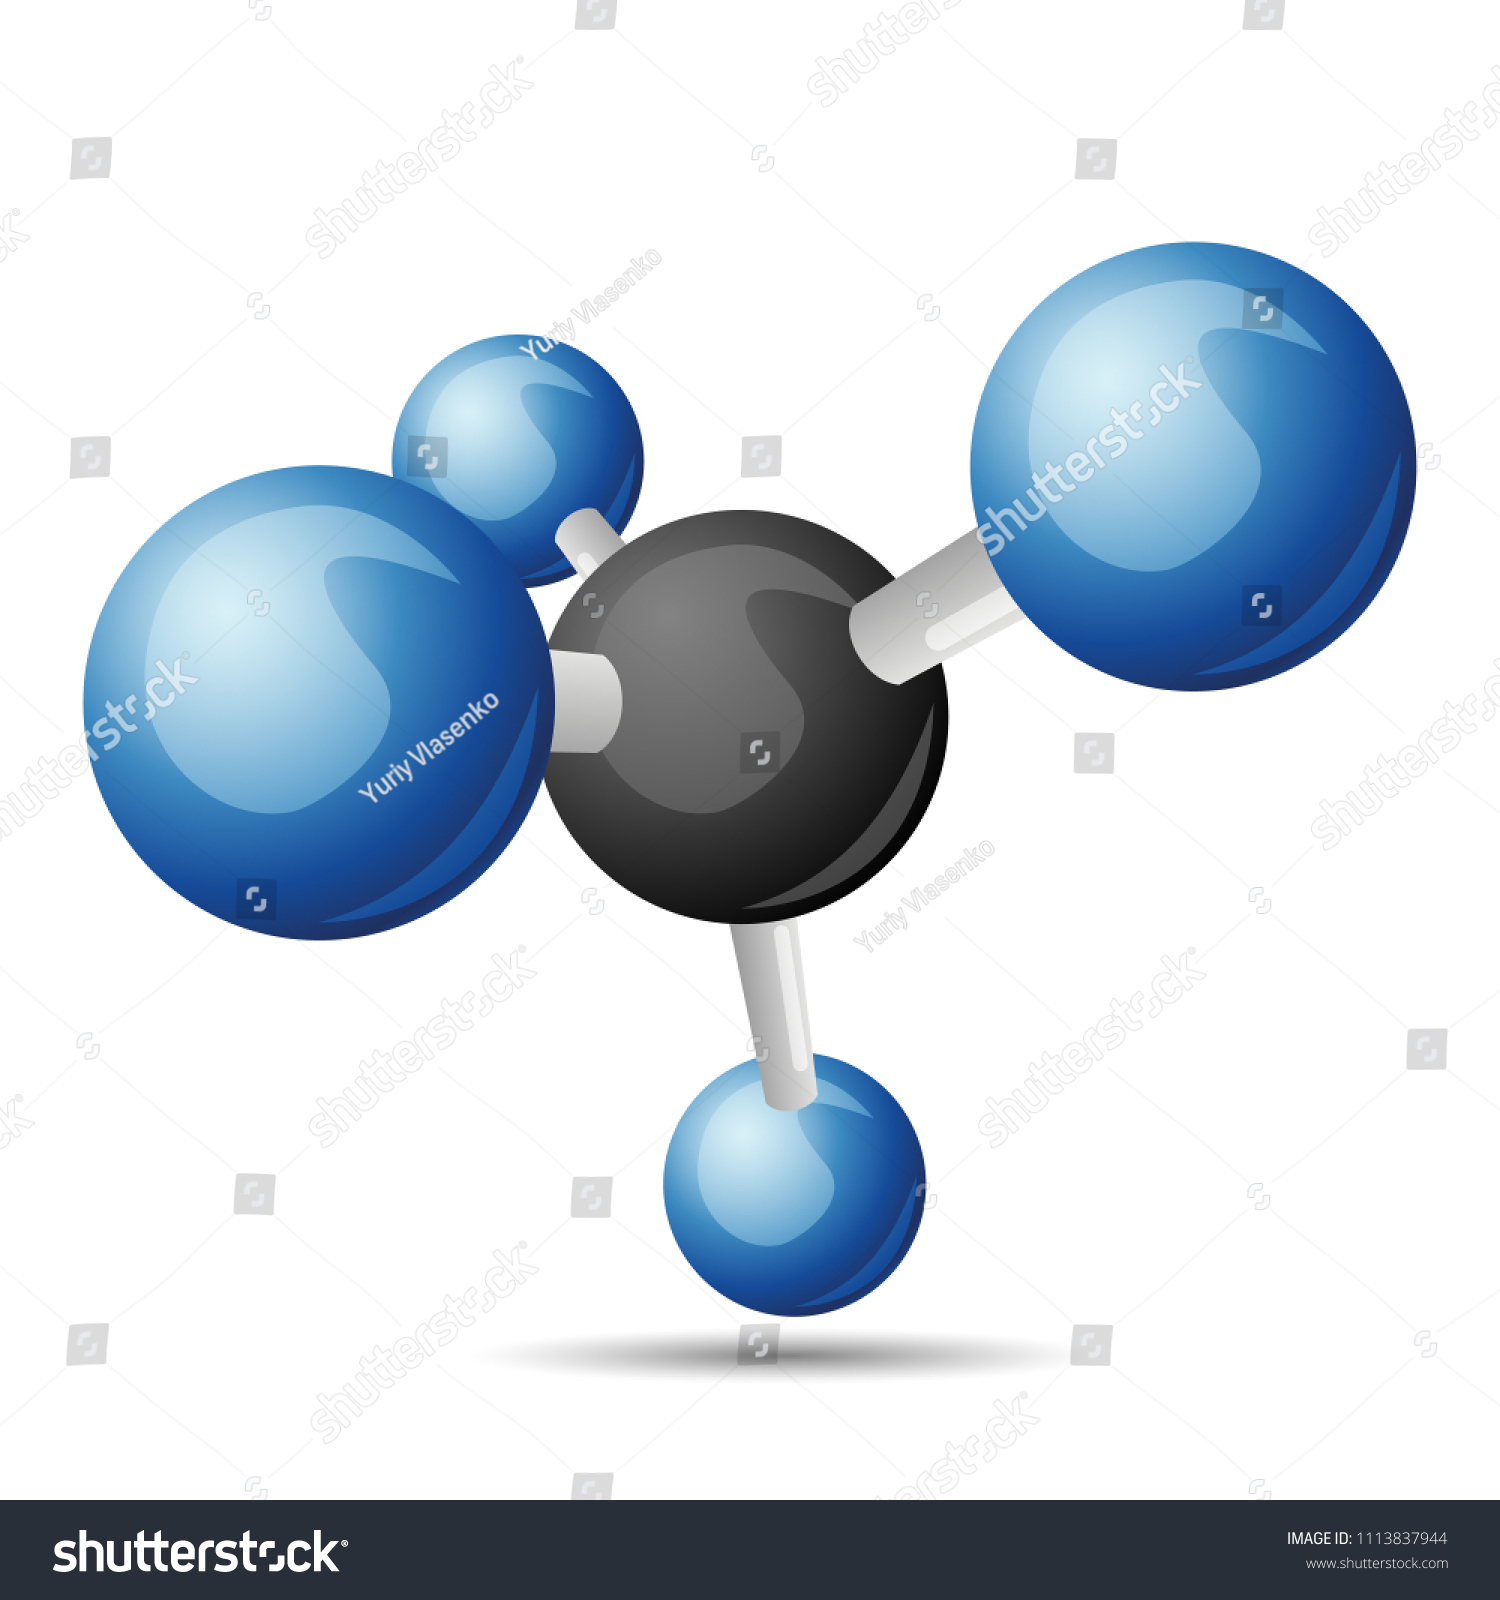 Ch4 Methane Molecule Illustration Stock Vector Royalty Free